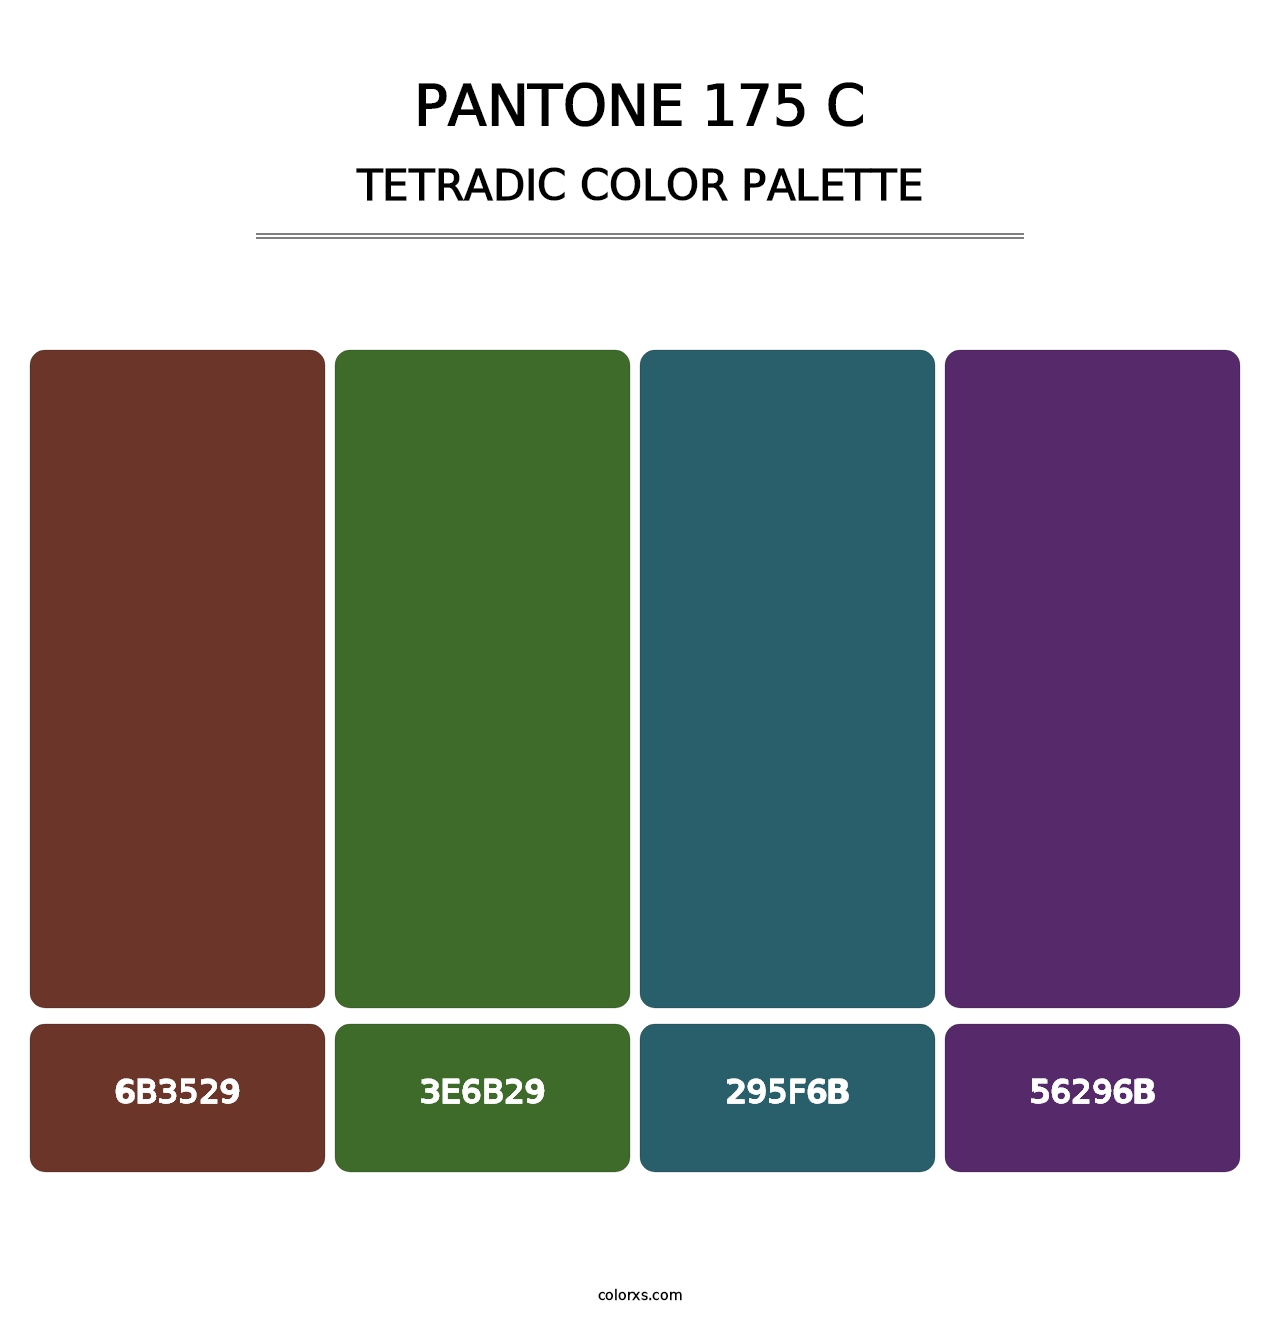 PANTONE 175 C - Tetradic Color Palette